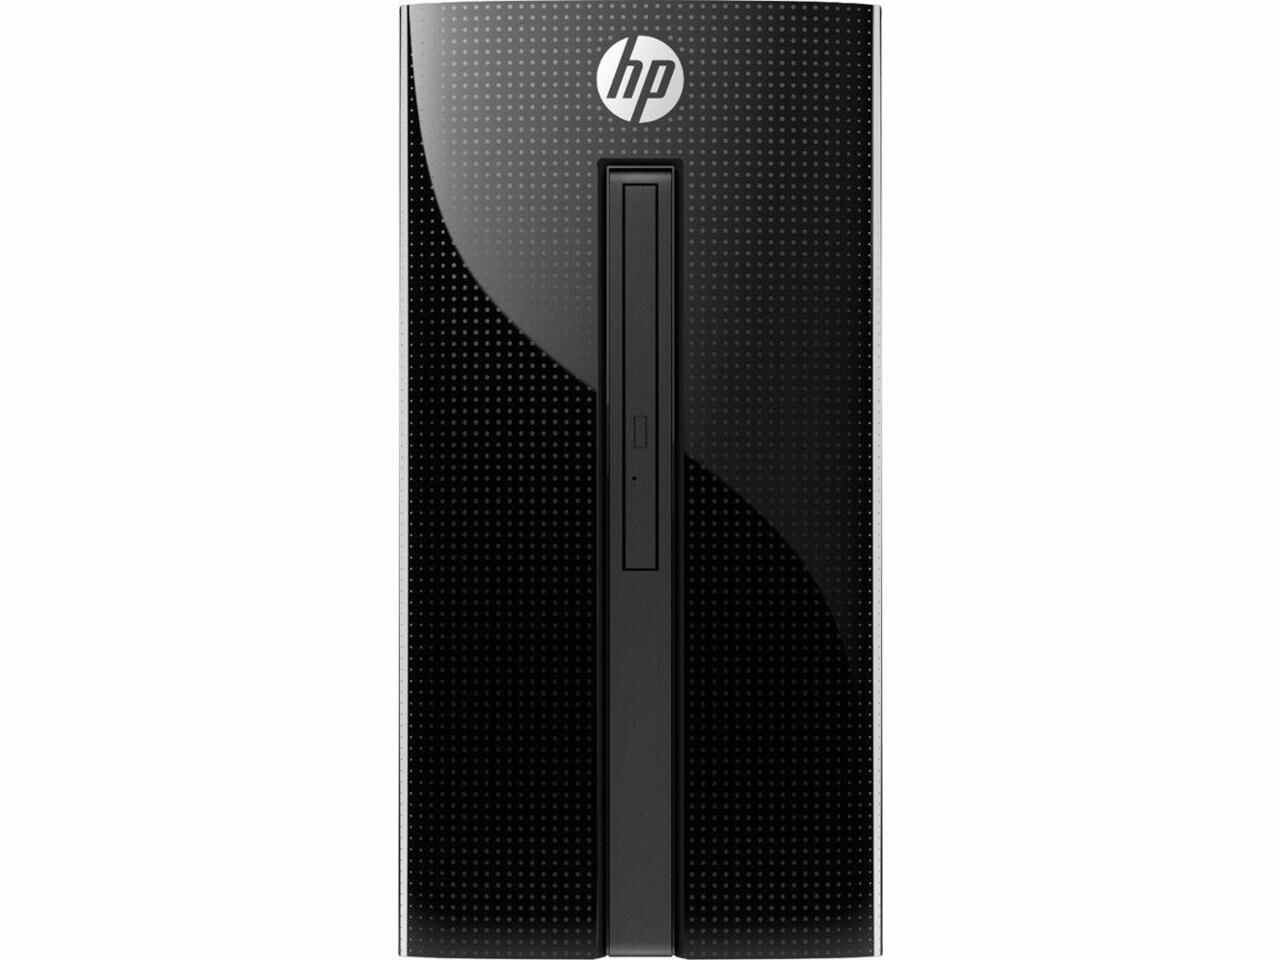 HP Flagship High-Performance Desktop| Intel Quad Core i7-7700T| 12GB DDR4 SDRAM |1T 7200 RPM HDD | DVD+/-RW| Bluetooth 4.2| WIFI| HDMI |Windows 10 | Includes Keyboard and Mouse